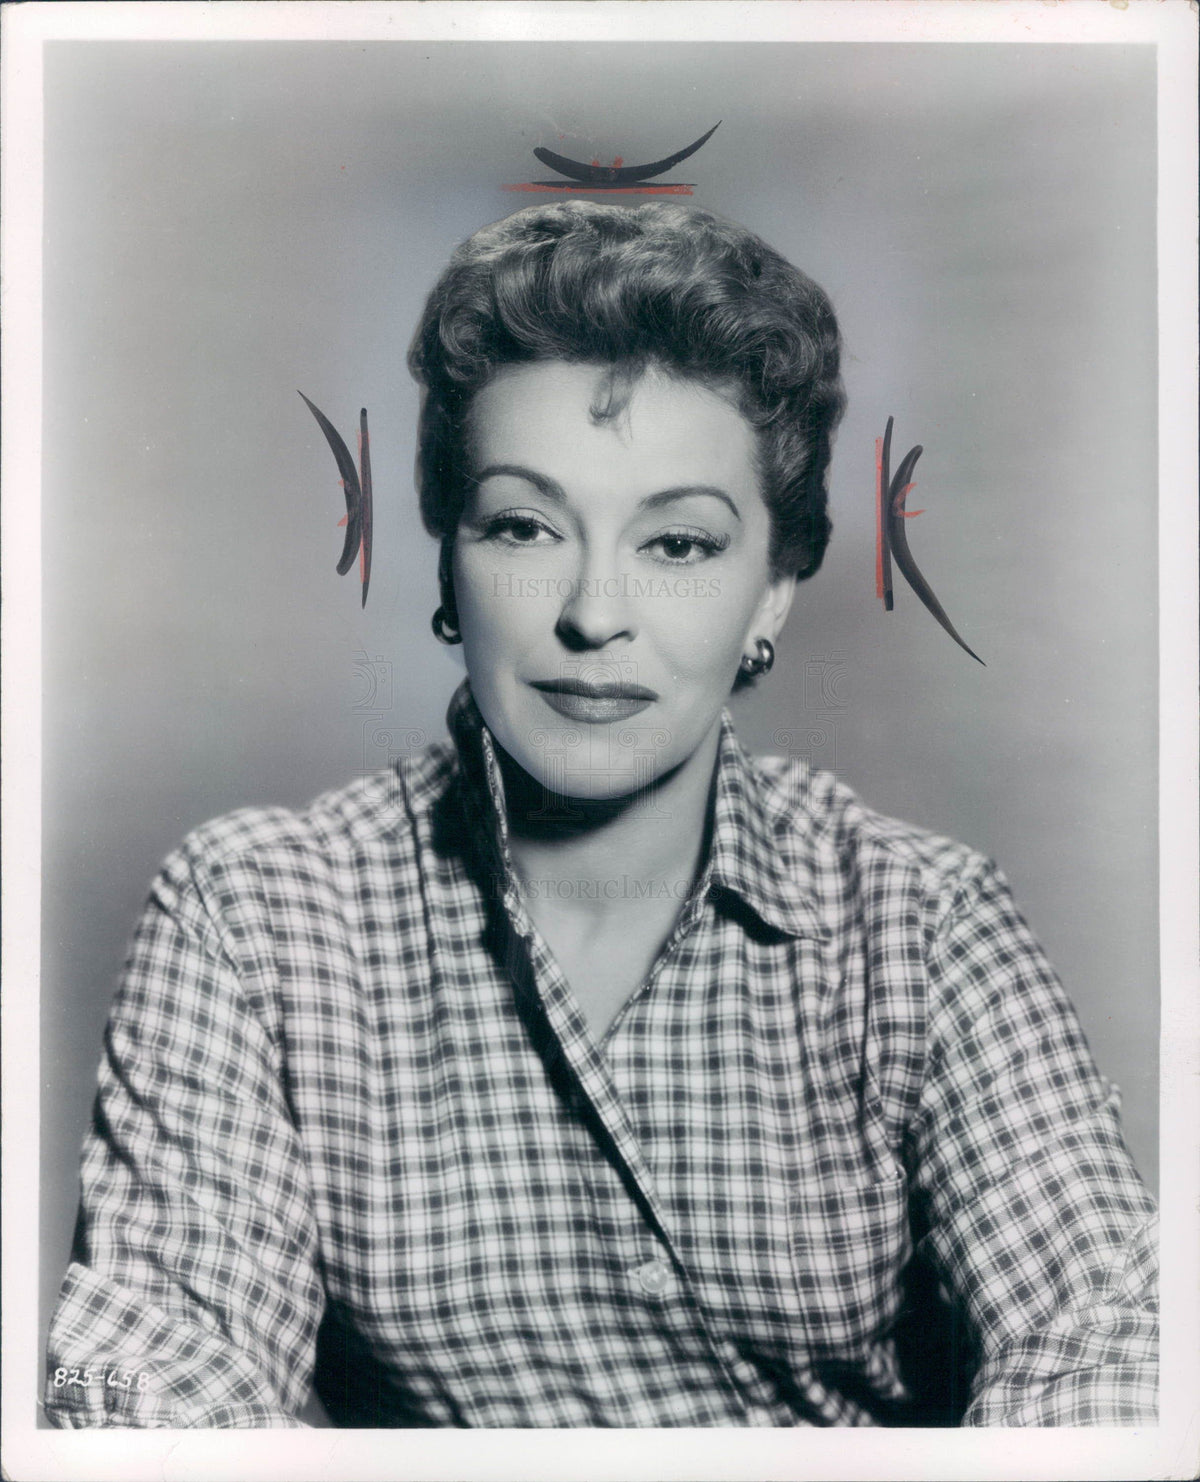 1964 Actress Nancy Kelly Press Photo - Historic Images